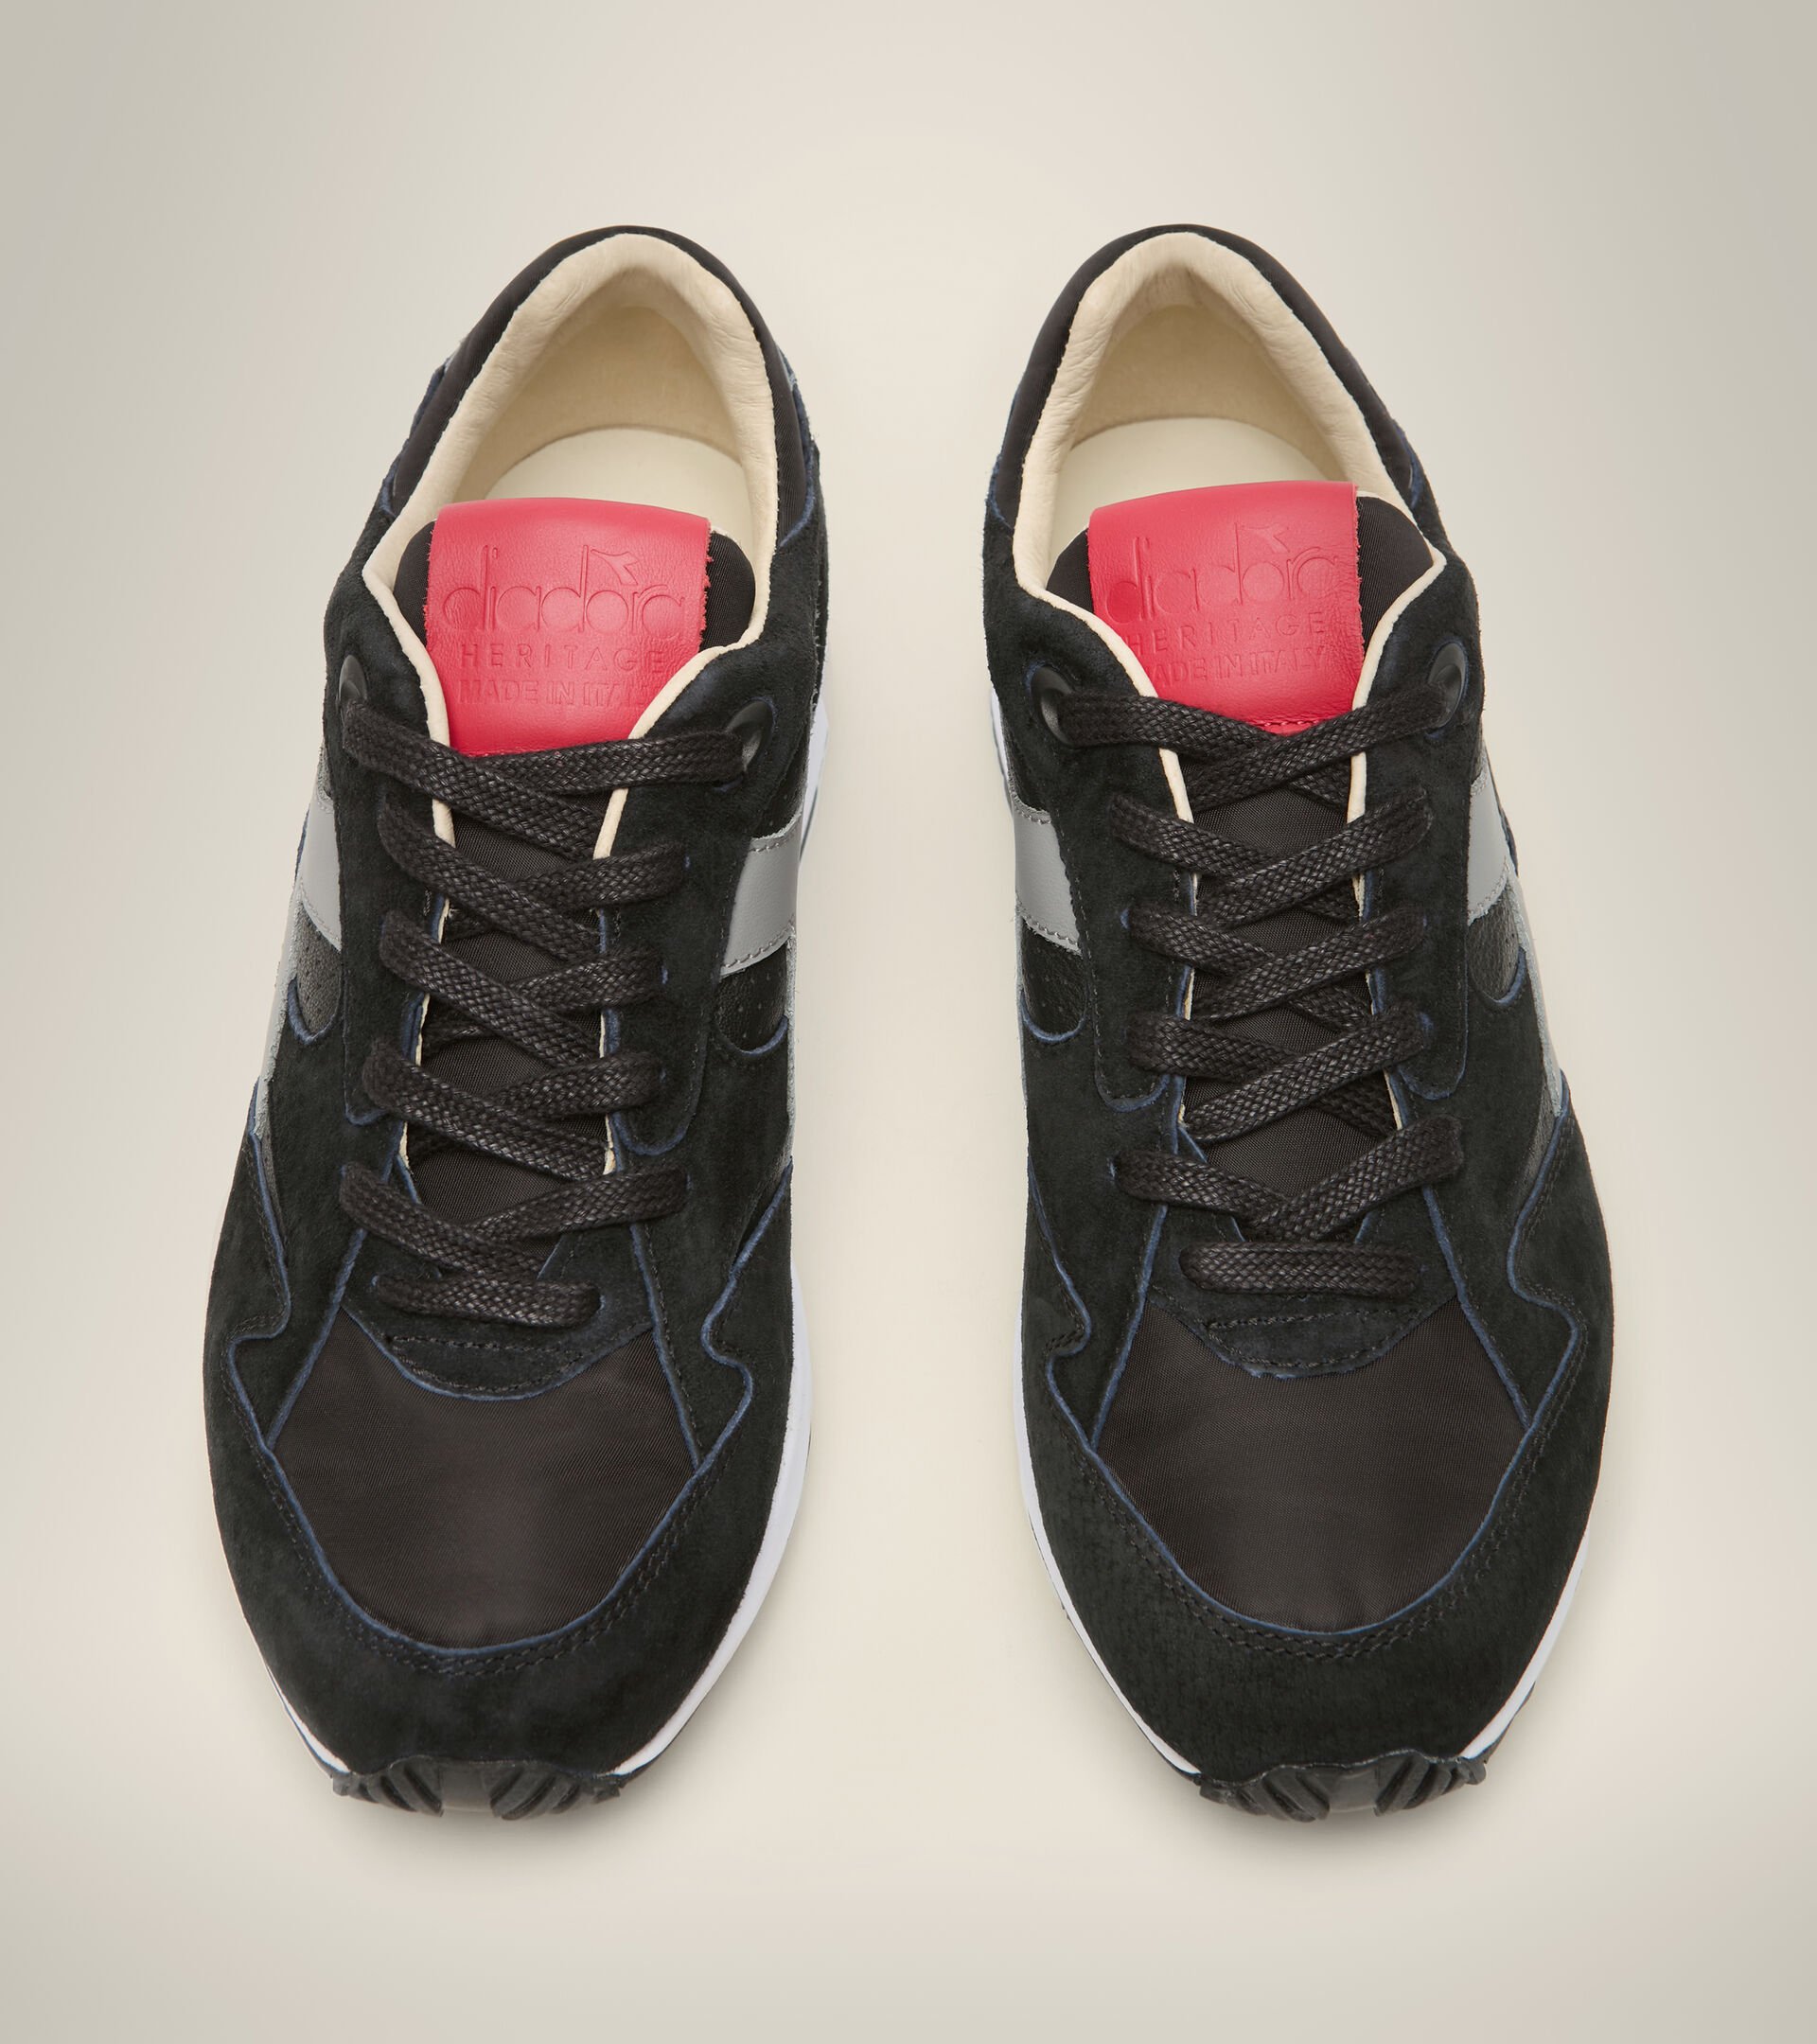 Heritage-Schuh Made in Italy - Herren ECLIPSE ITALIA SCHWARZ - Diadora